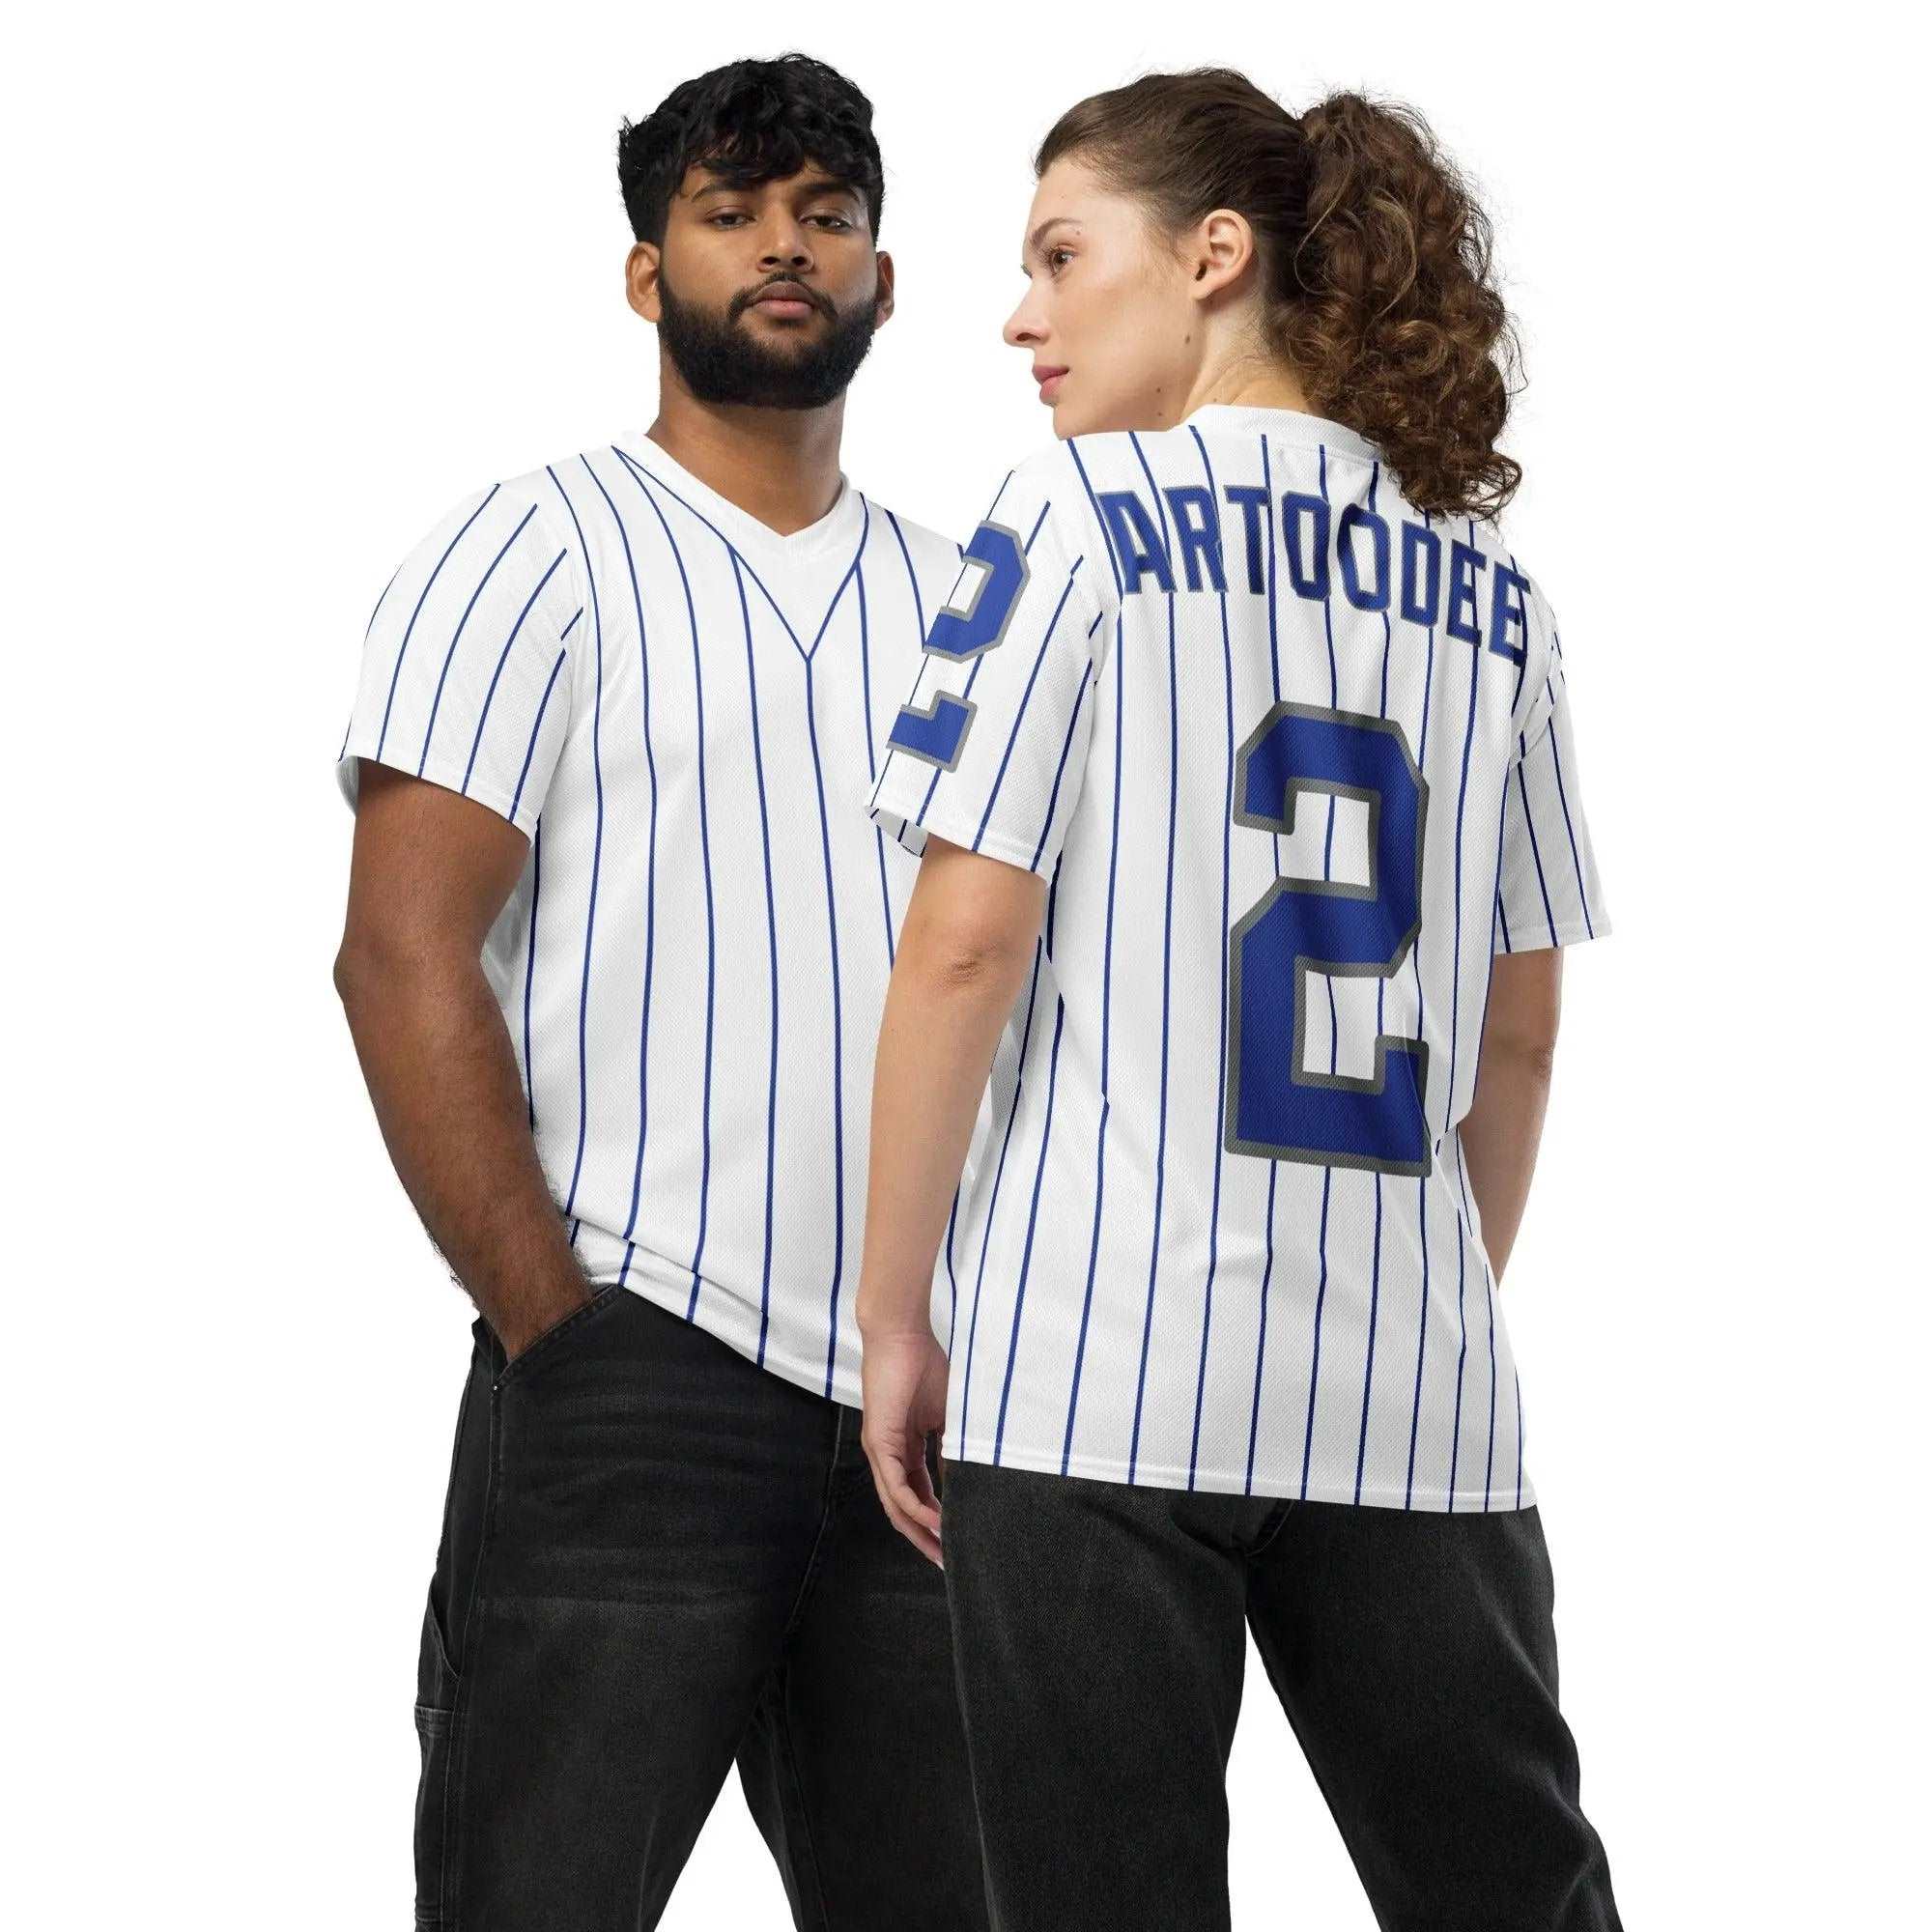 Artoodee #2 Baseball Recycled unisex sports jersey VAWDesigns